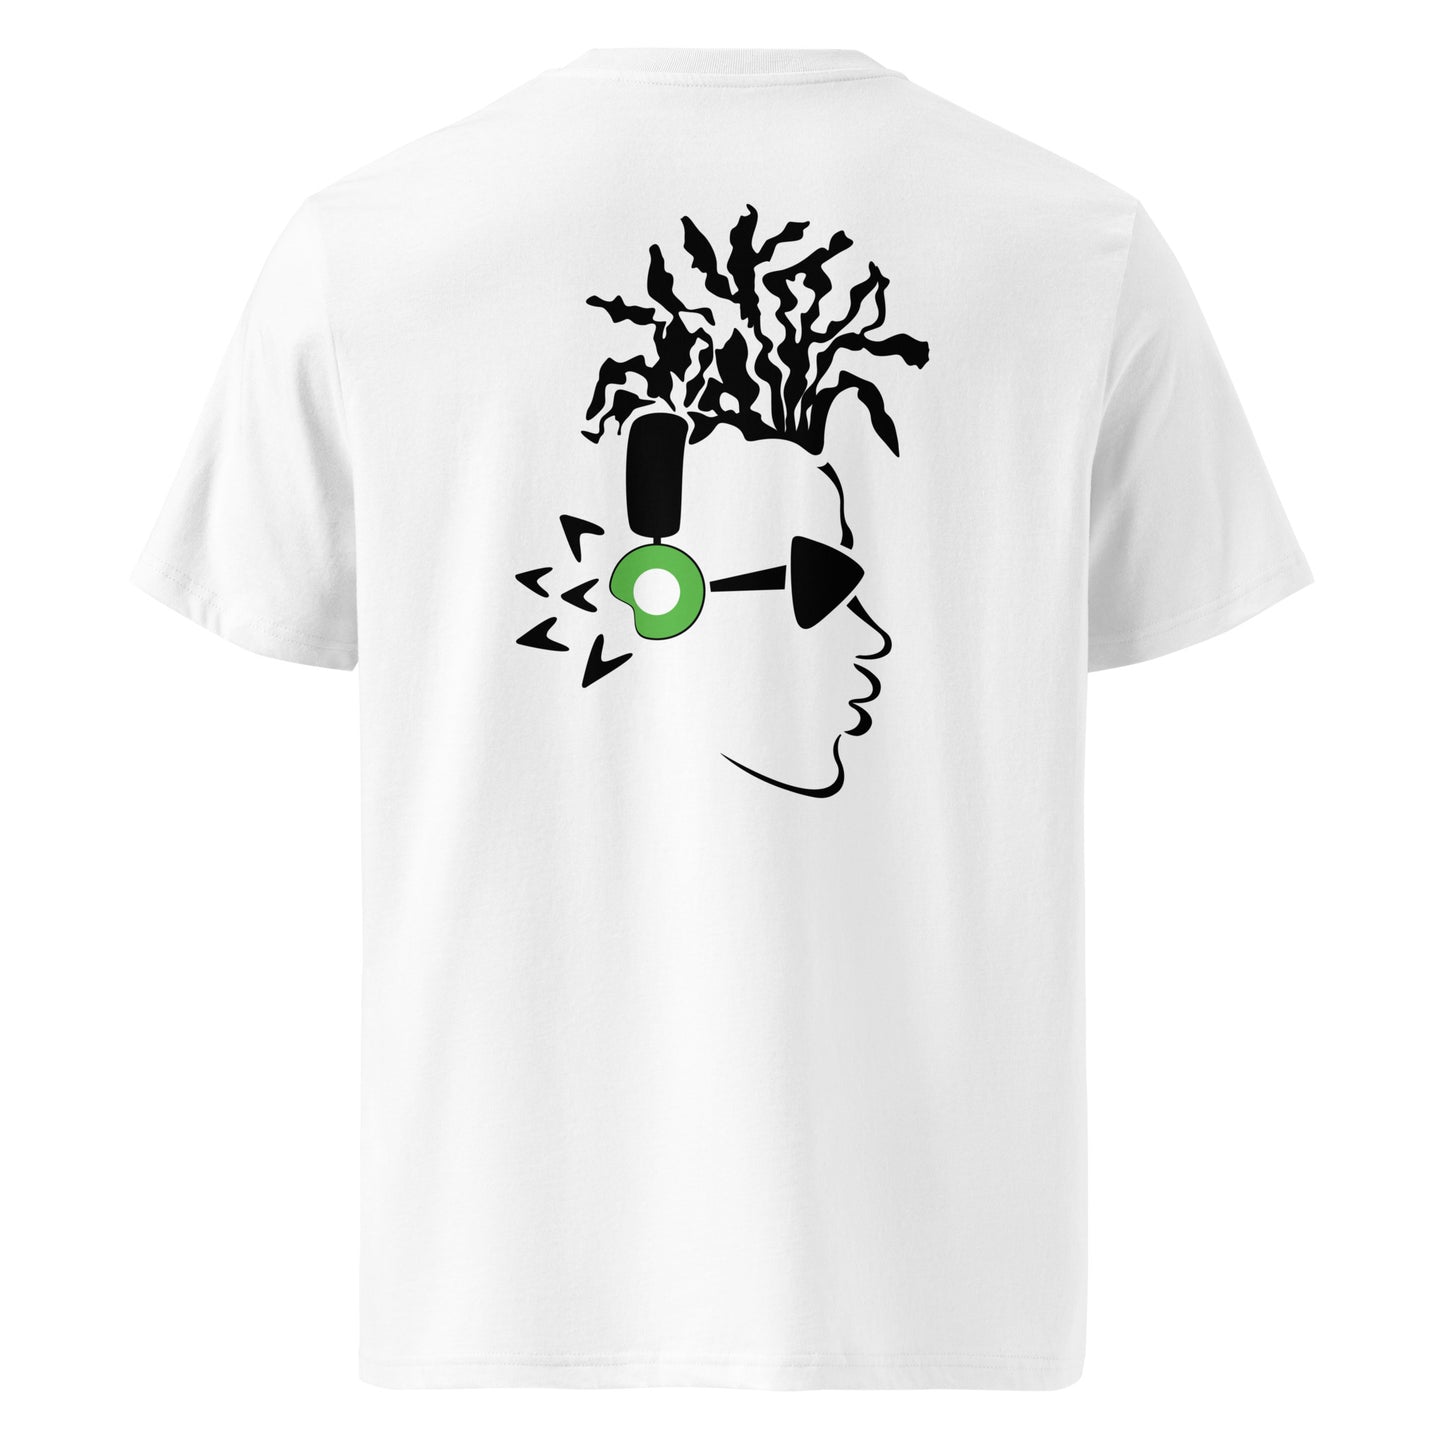 Tone Def Records X O/S (Black Logo) (v2) Unisex organic cotton t-shirt